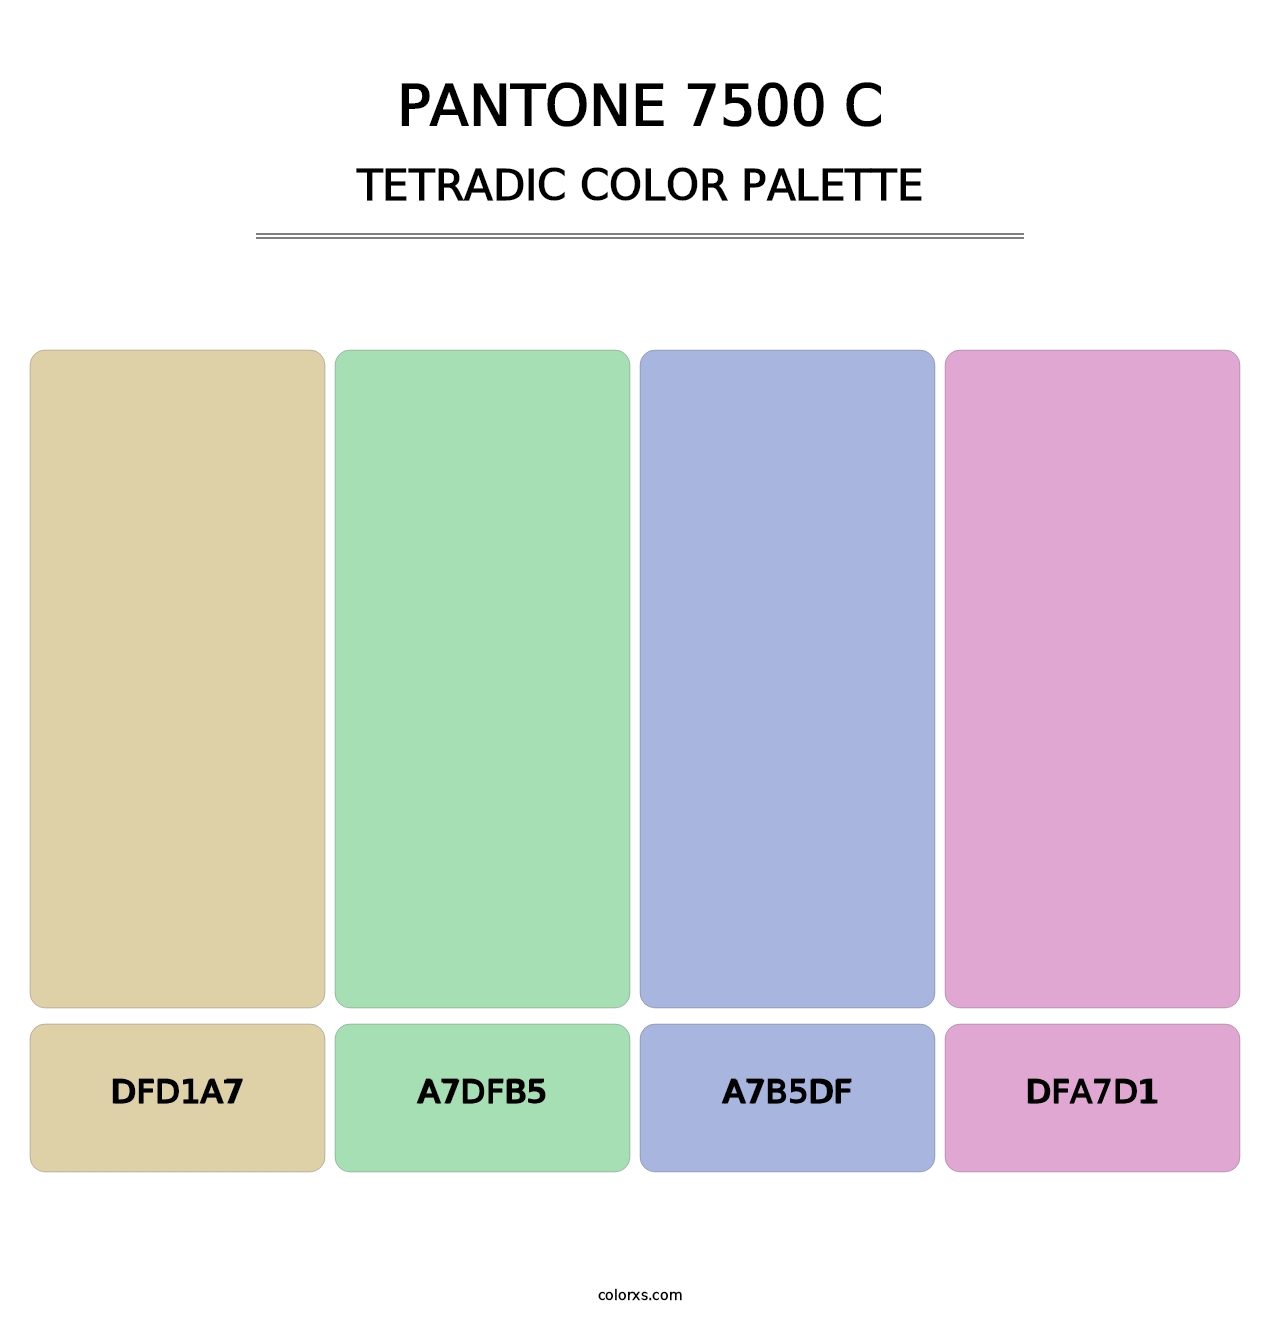 PANTONE 7500 C - Tetradic Color Palette